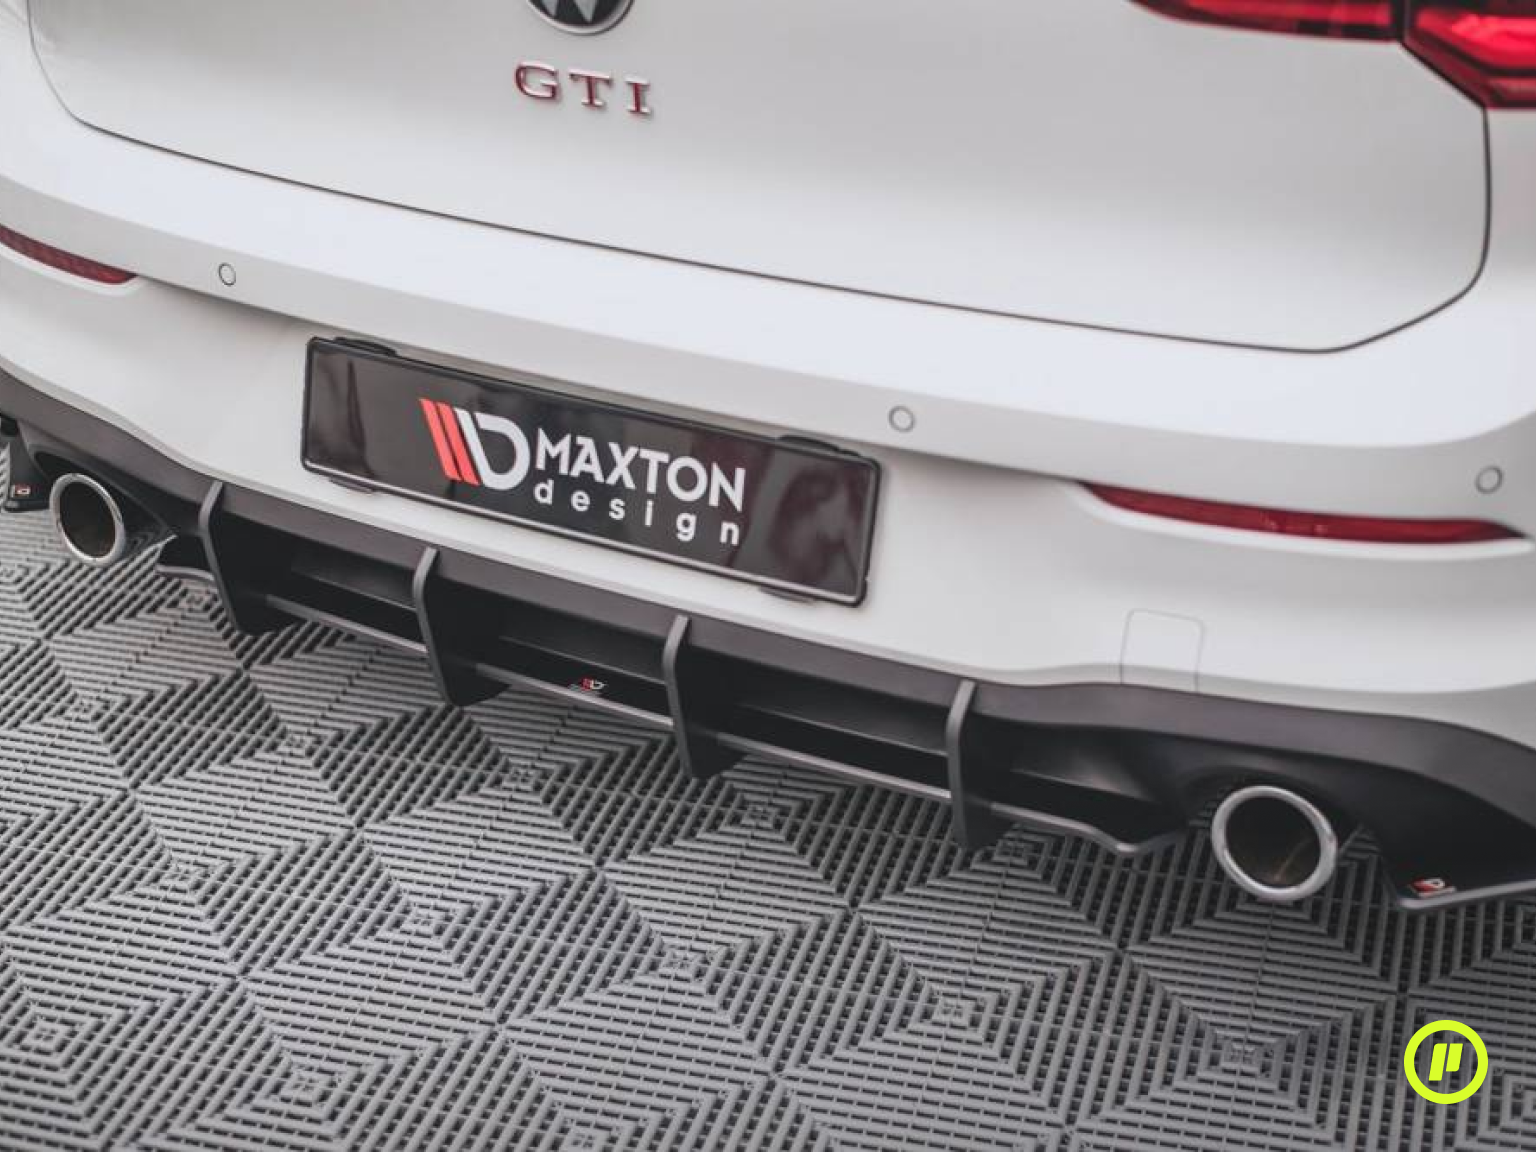 Maxton Design - Racing Durability Rear Diffuser v1 for Volkswagen Golf 8 GTI (Mk8 2019+)